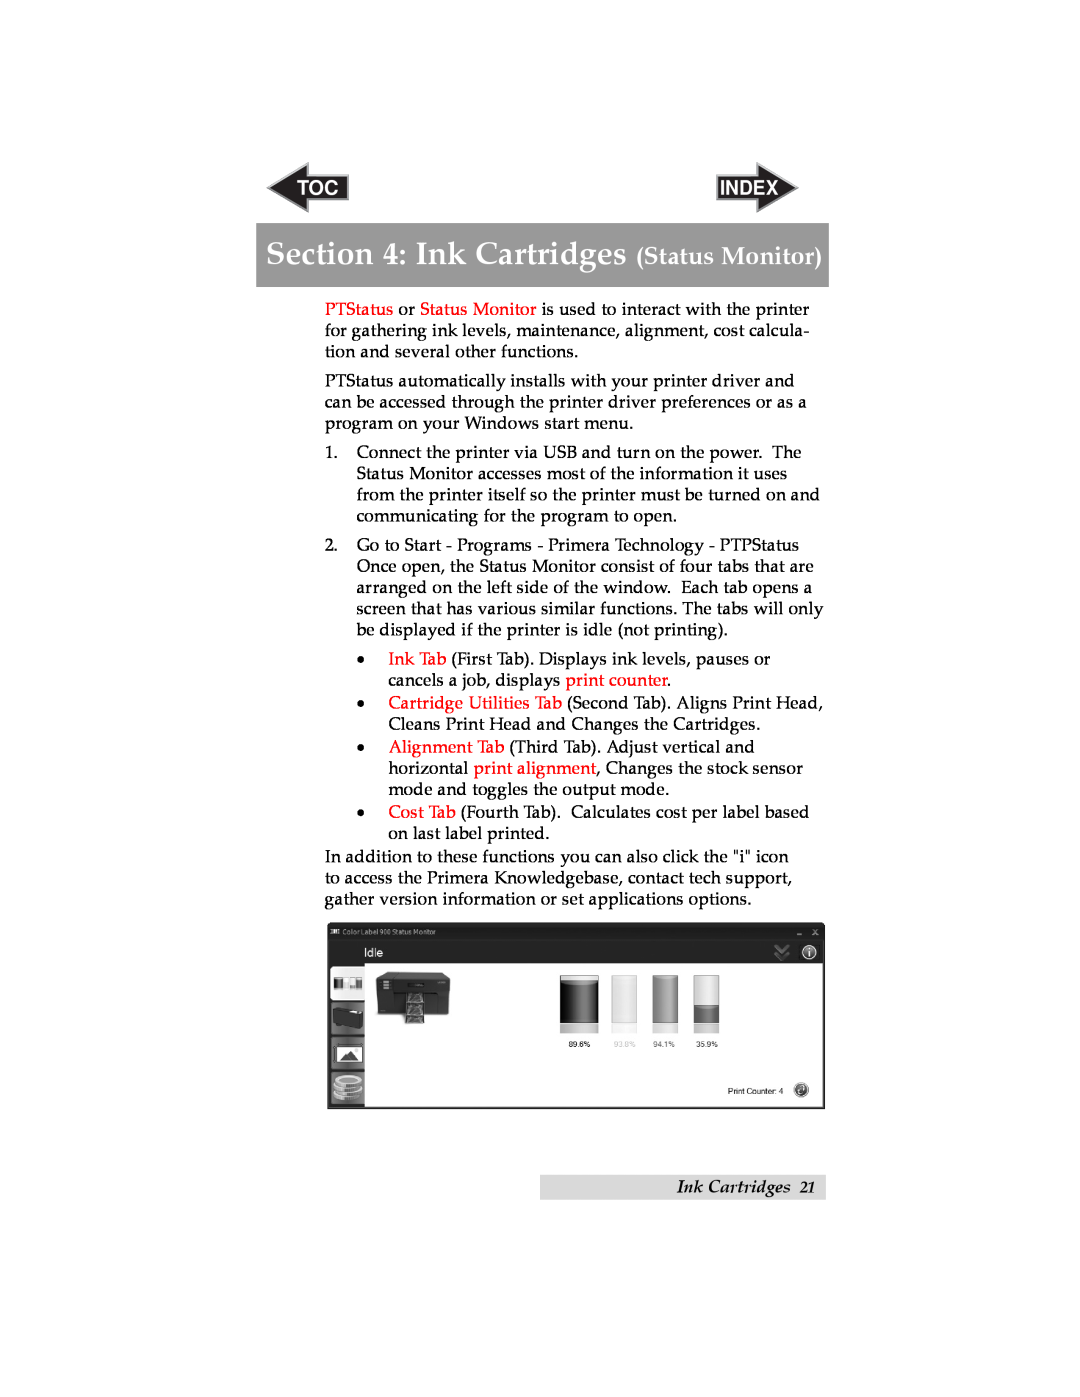 Primera Technology RX900 user manual Ink Cartridges Status Monitor, Index 